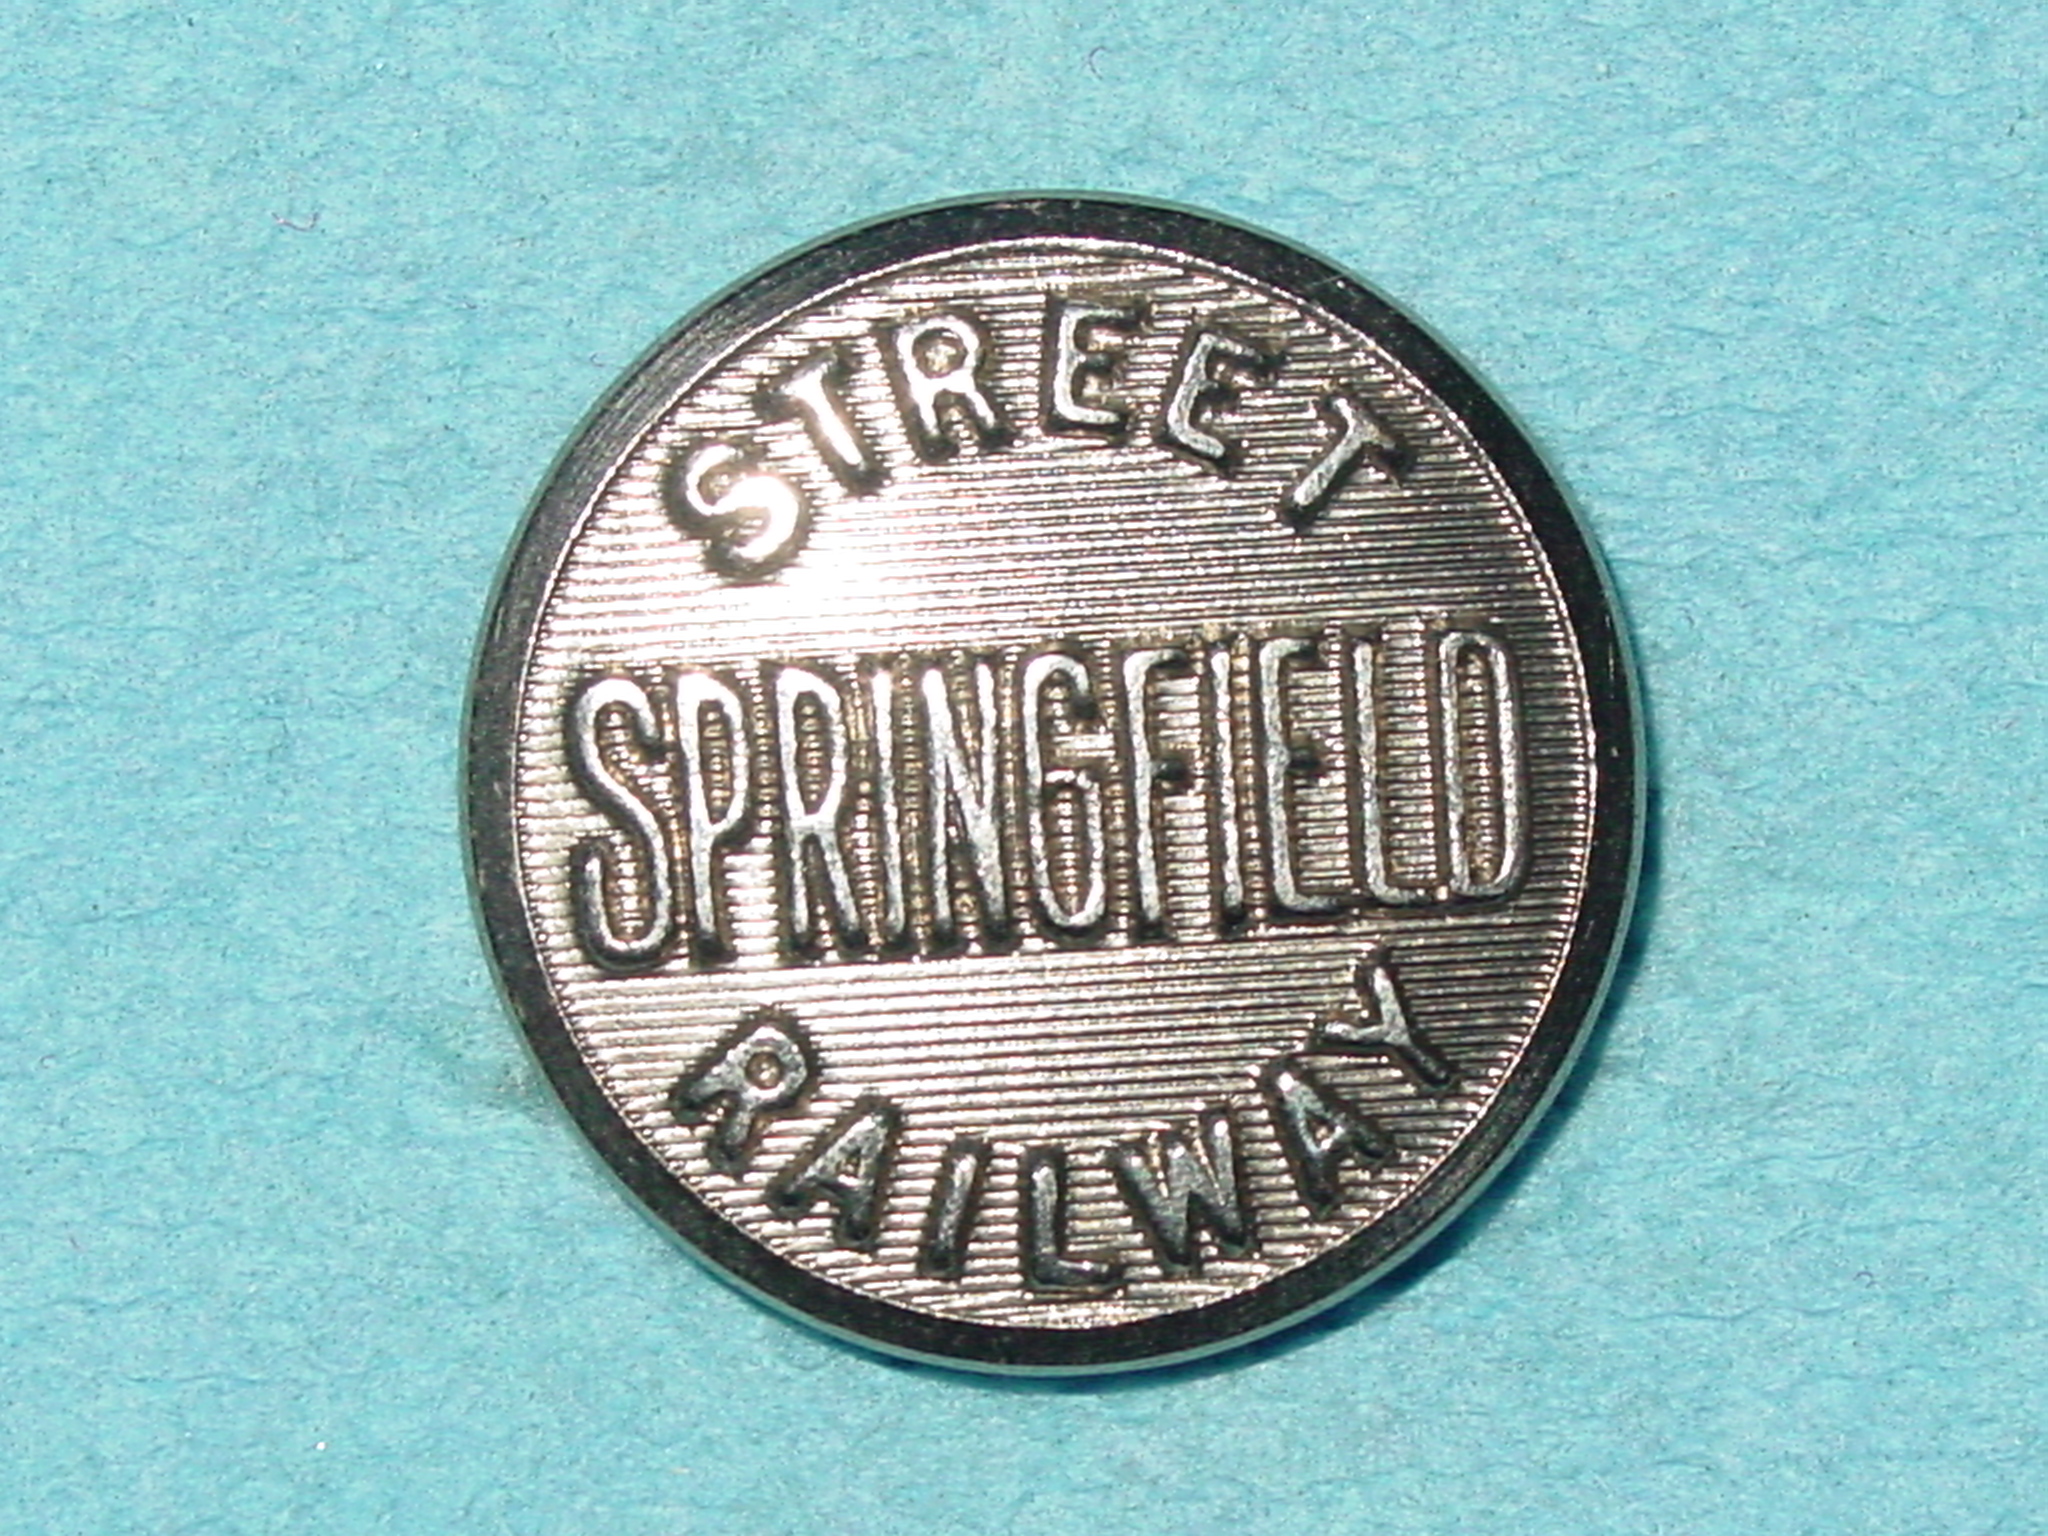 Pattern #15056 – Springfield Street Railway – Waterbury Button Company